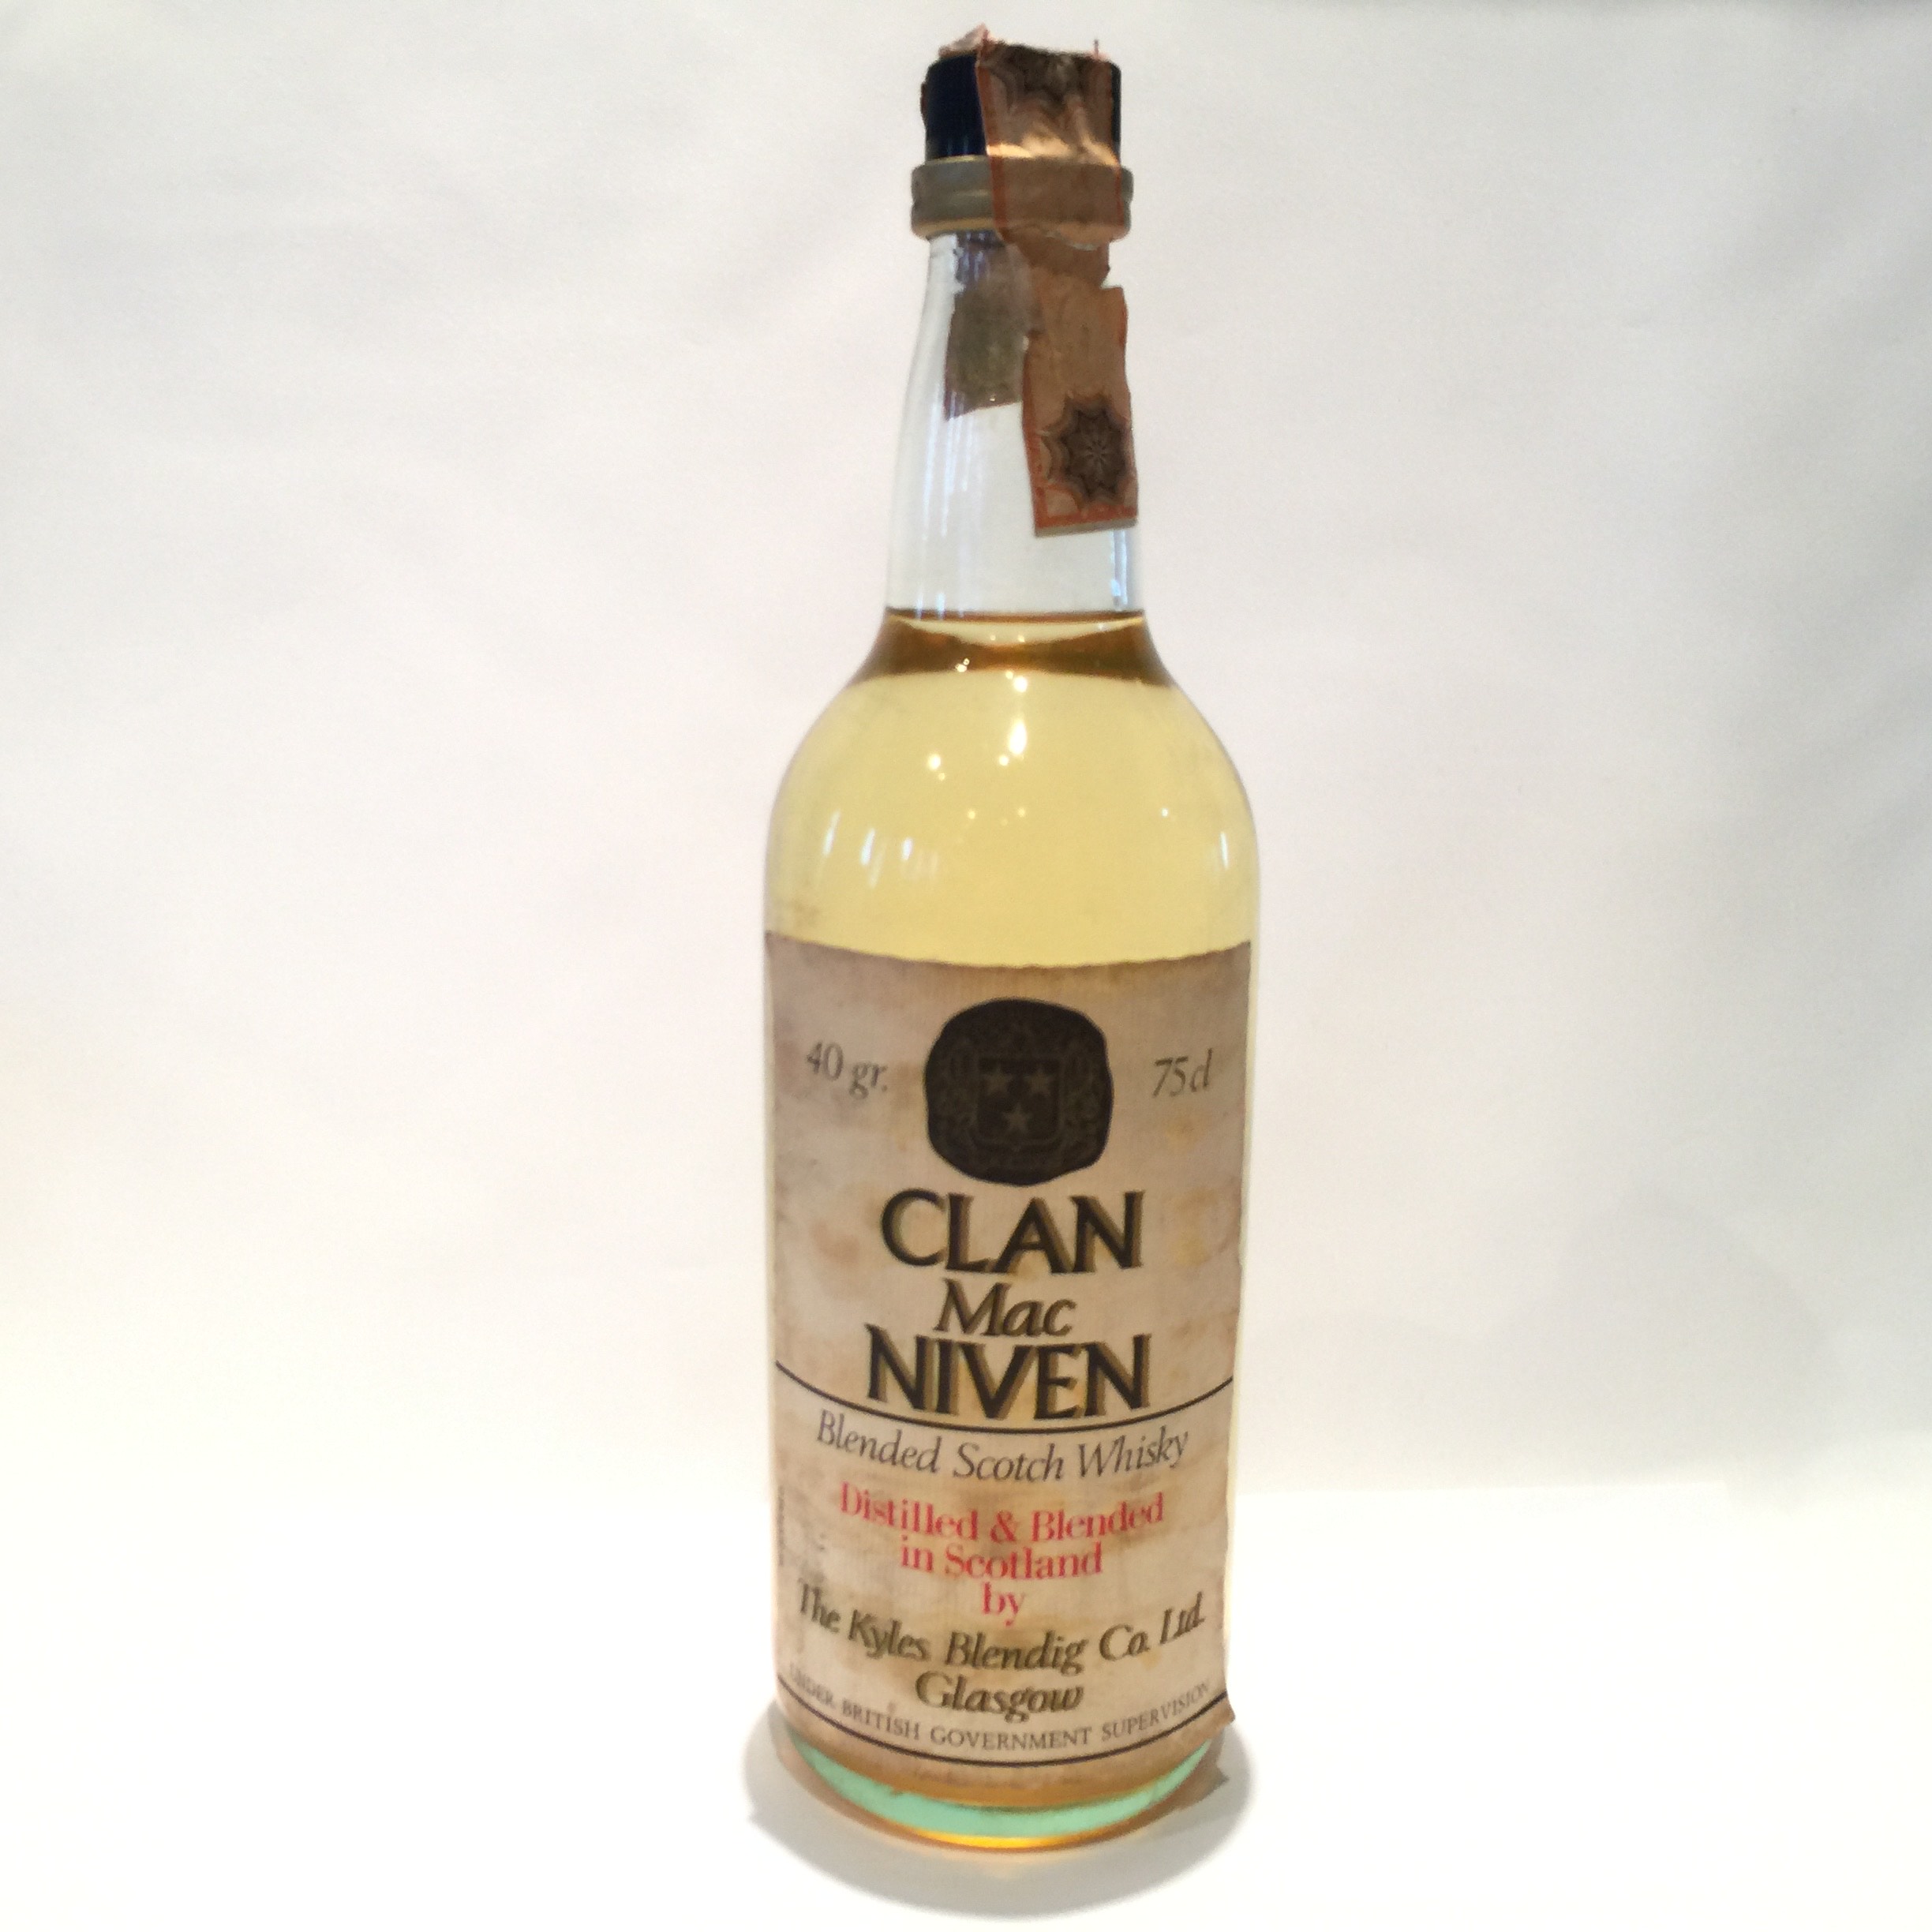 Clan Mac NivenN }bN lCoKyles Blending Co.Blended Scotch Whisky40 gr.75 cl